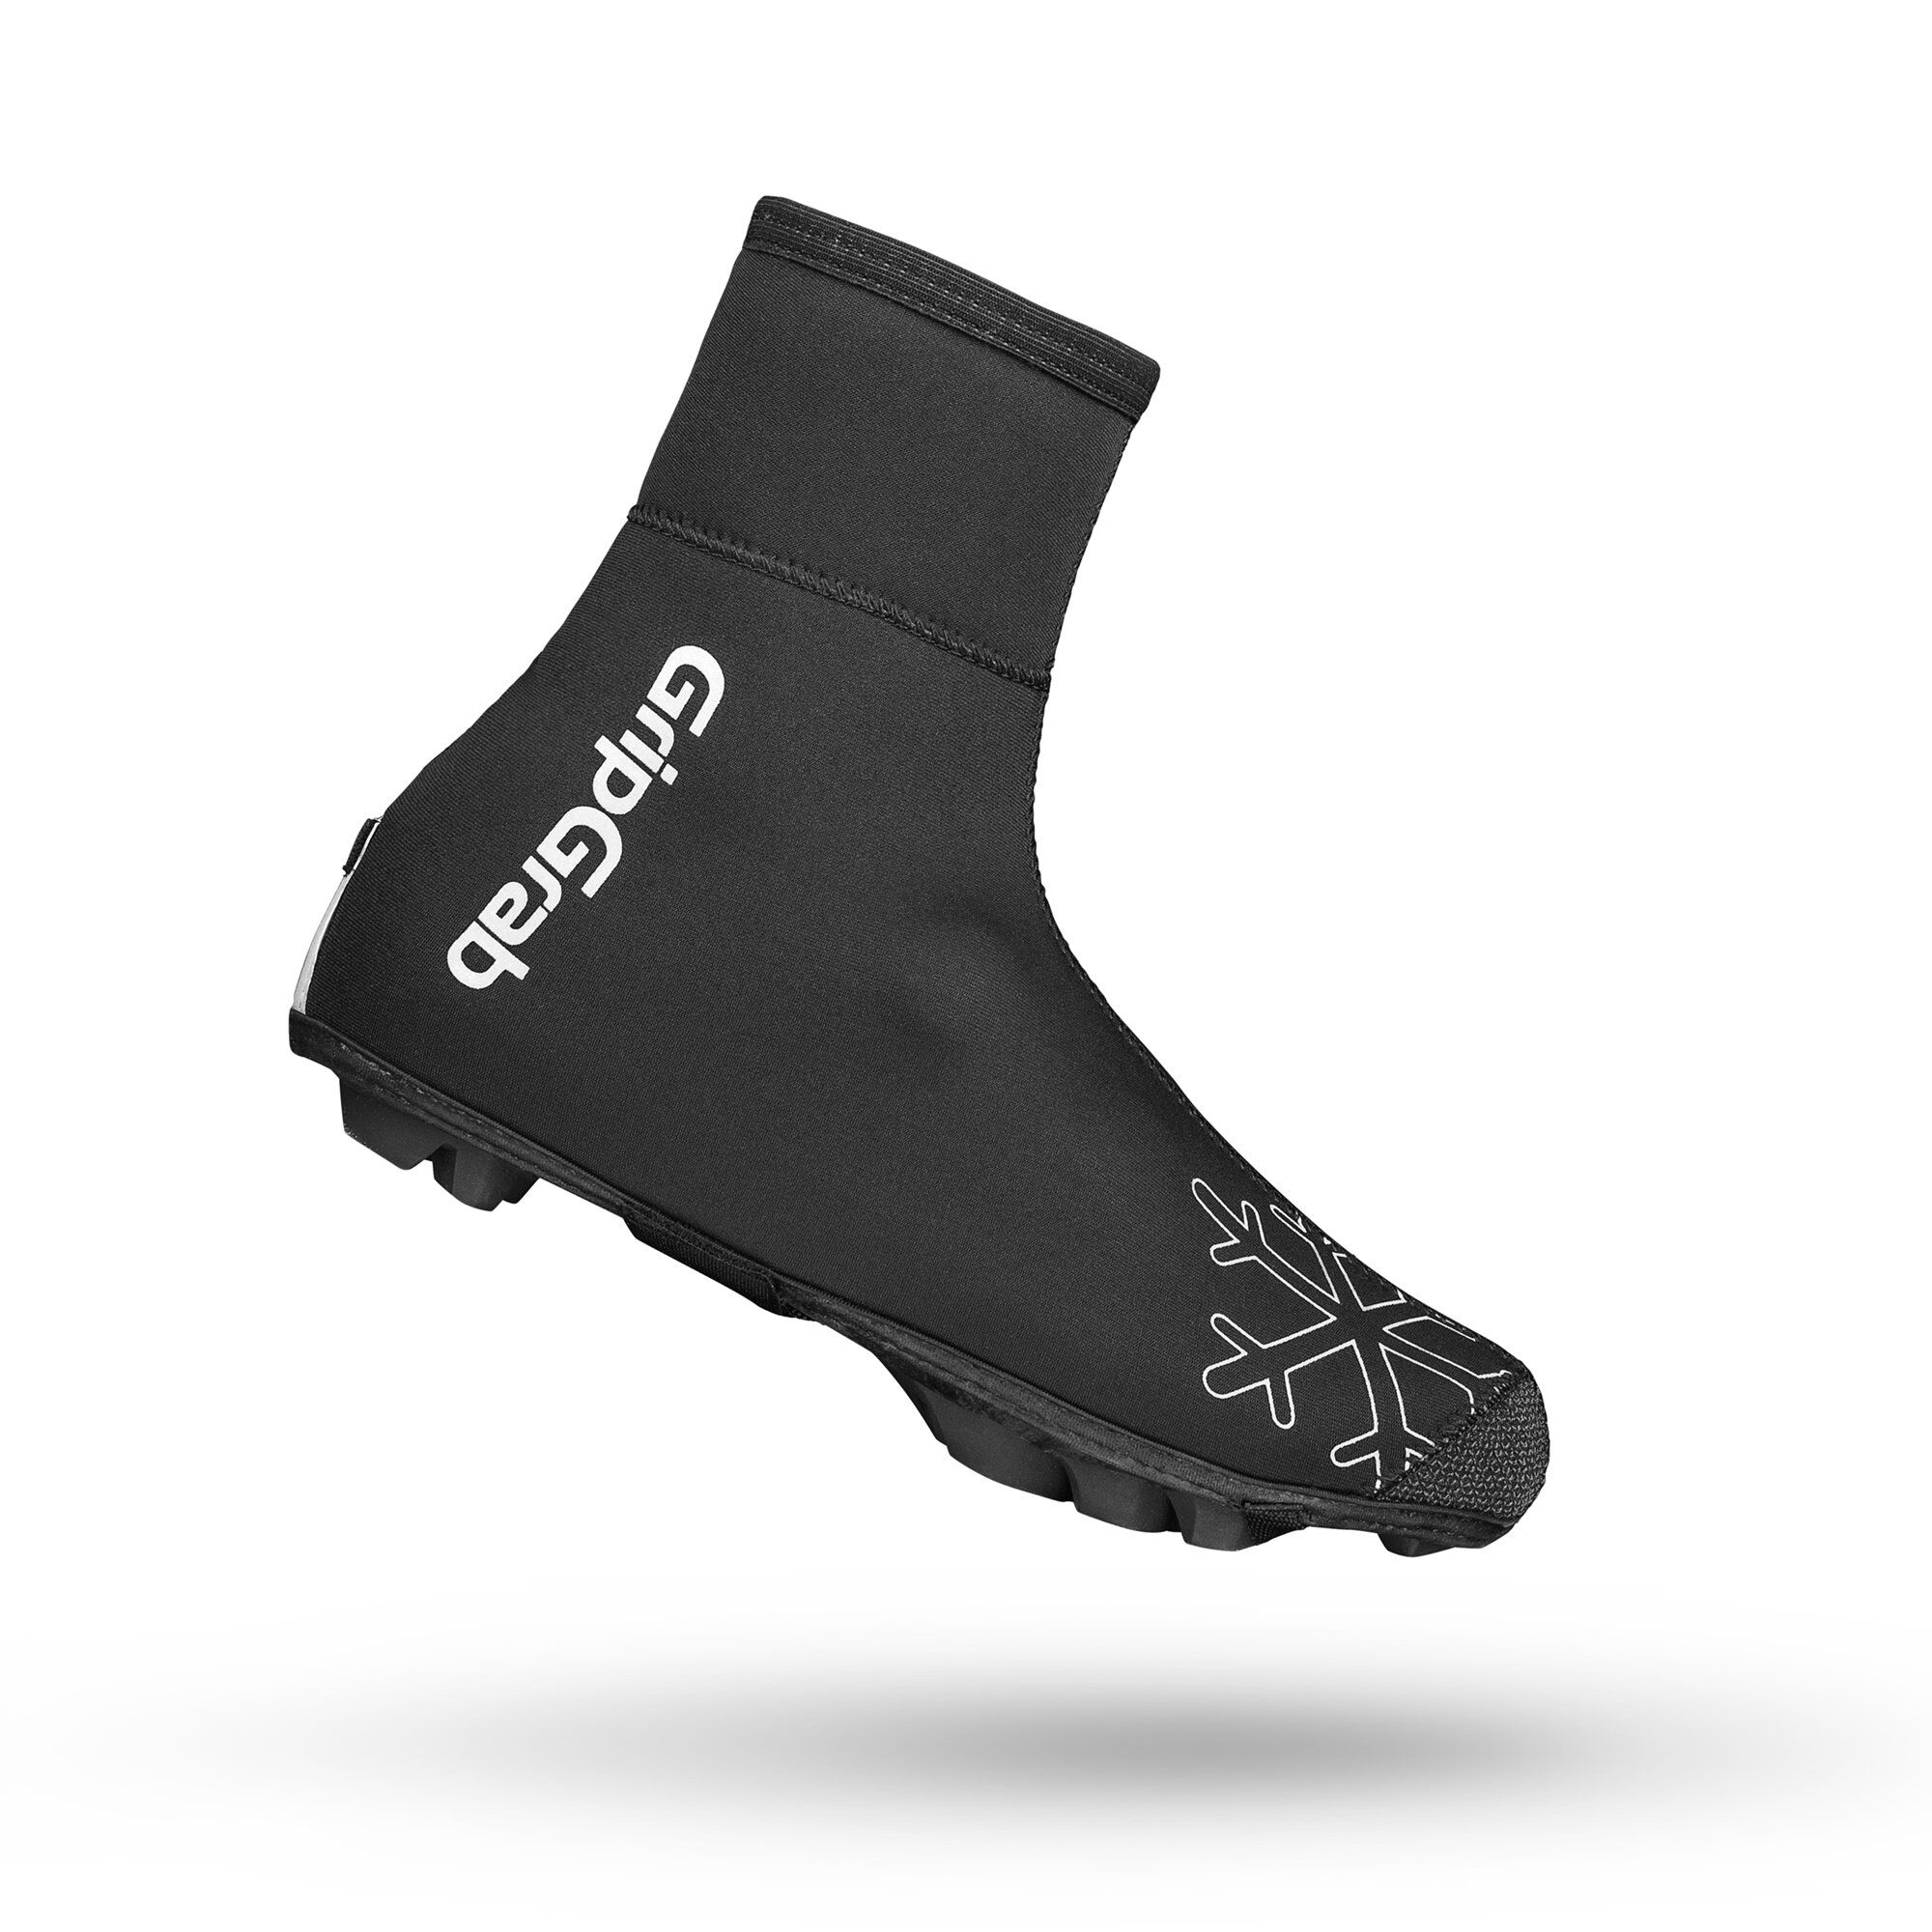 Grip Grab Arctic X Waterproof Deep Winter MTB/CX Shoe Cover - Fahrrad Überschuhe